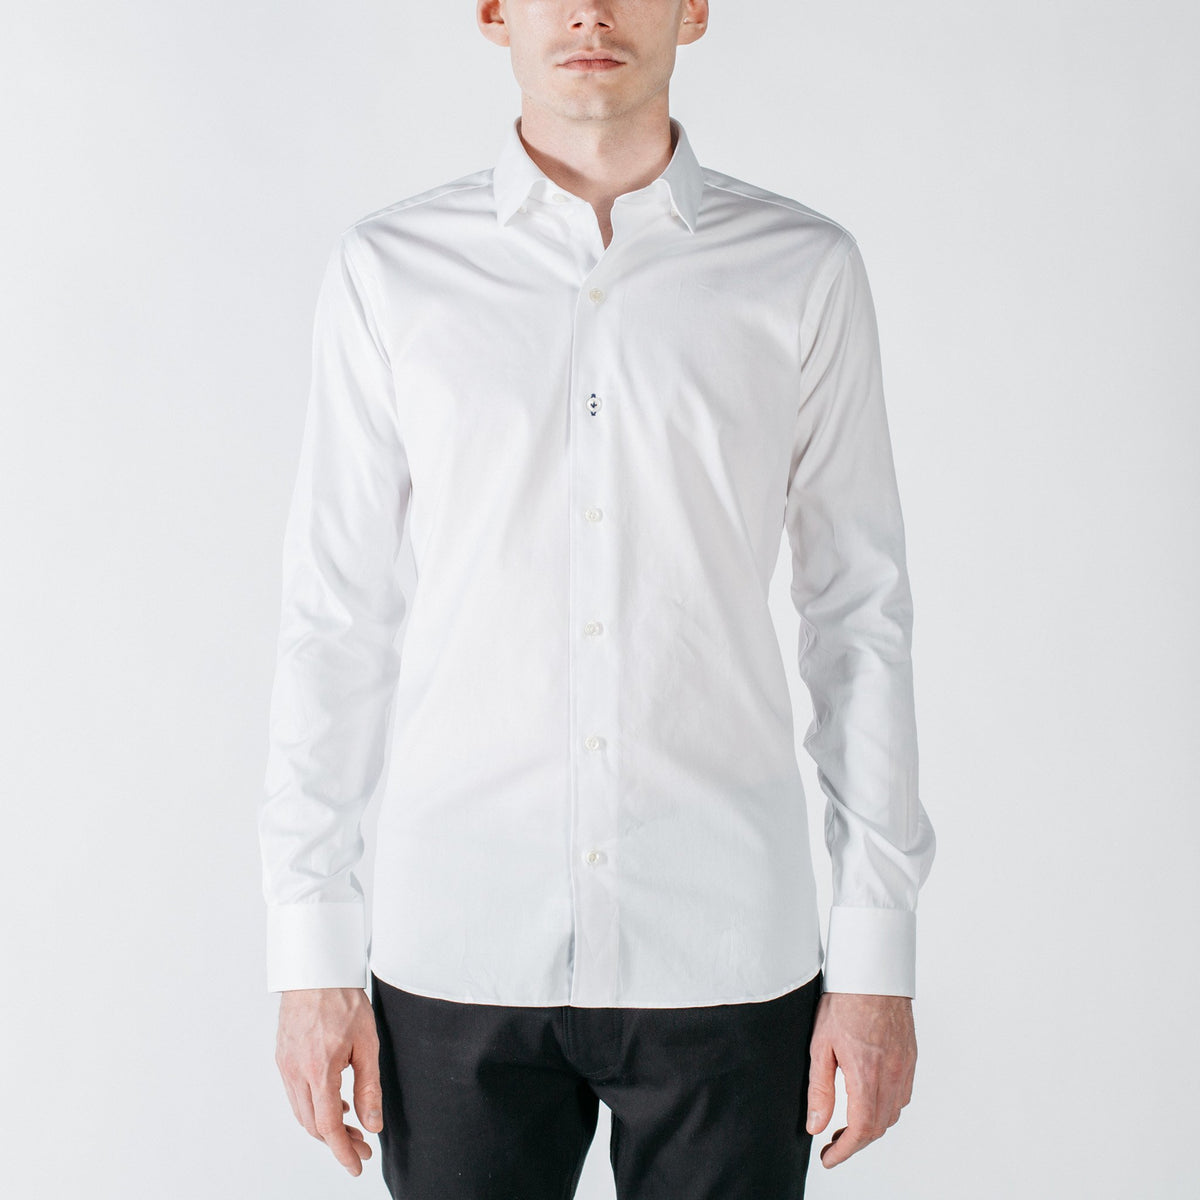 CORE // White Shirt Shirts Commonwealth Proper